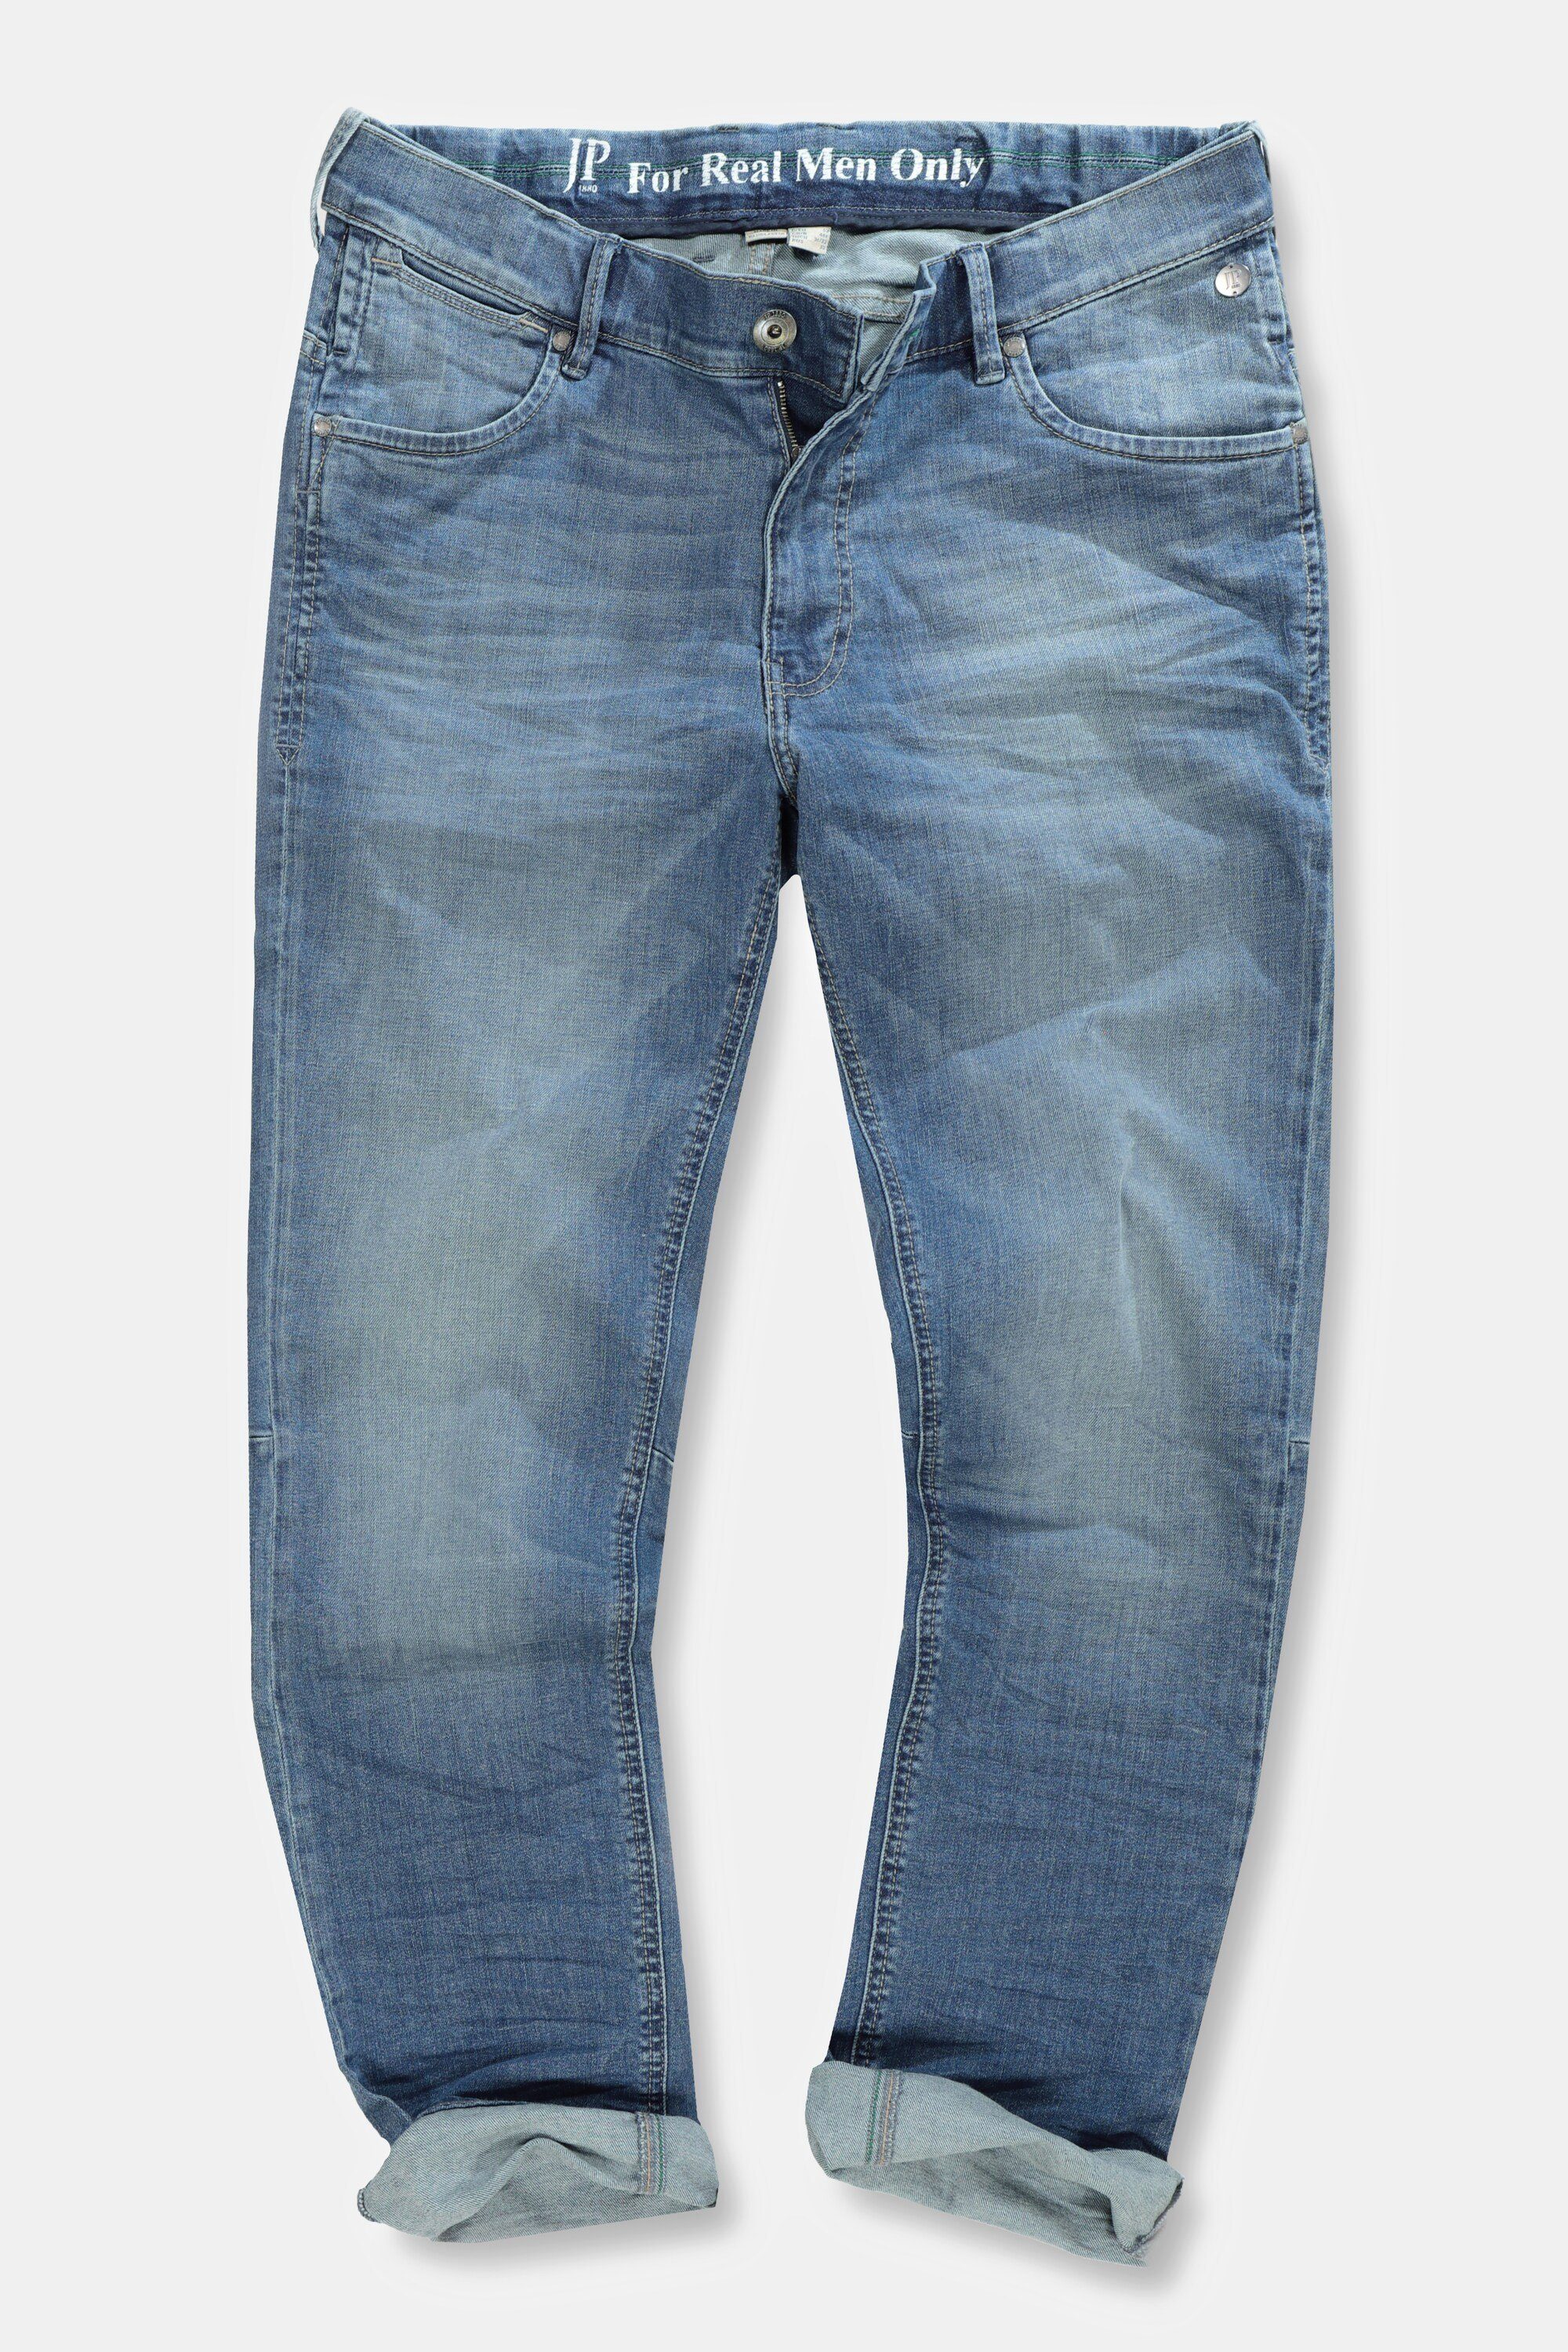 Cargohose Denim JP1880 blue Straight light Jeans Traveller-Bund Fit